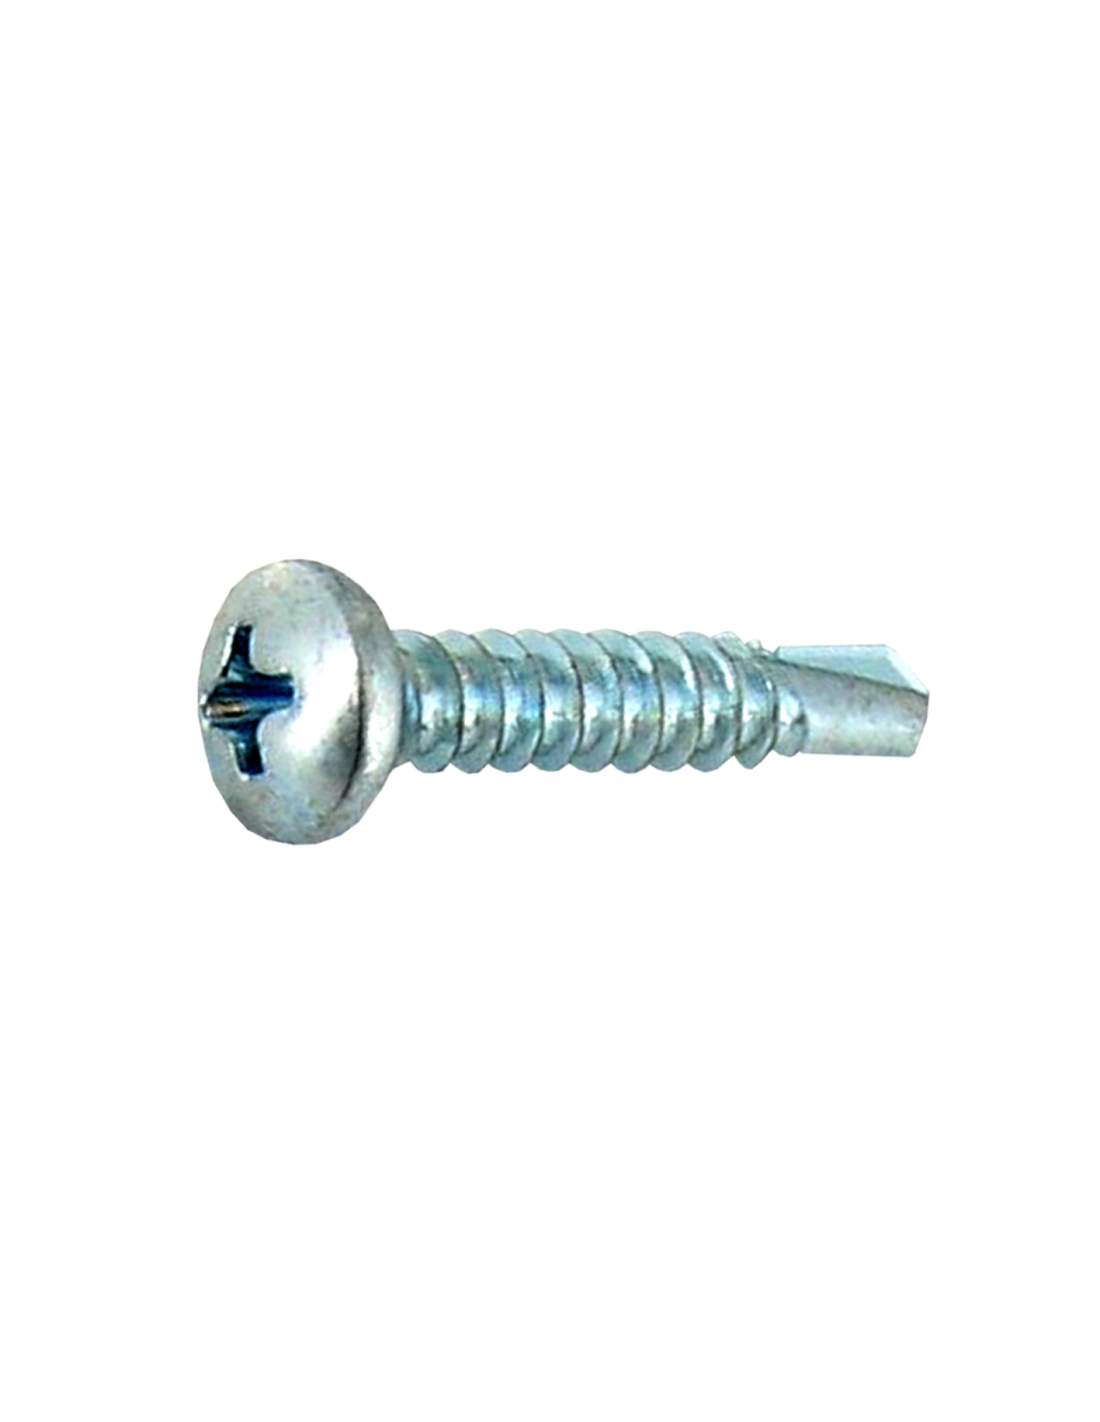 AZI 4.8x19 pan head self-drilling sheet metal screws, 13 pcs.